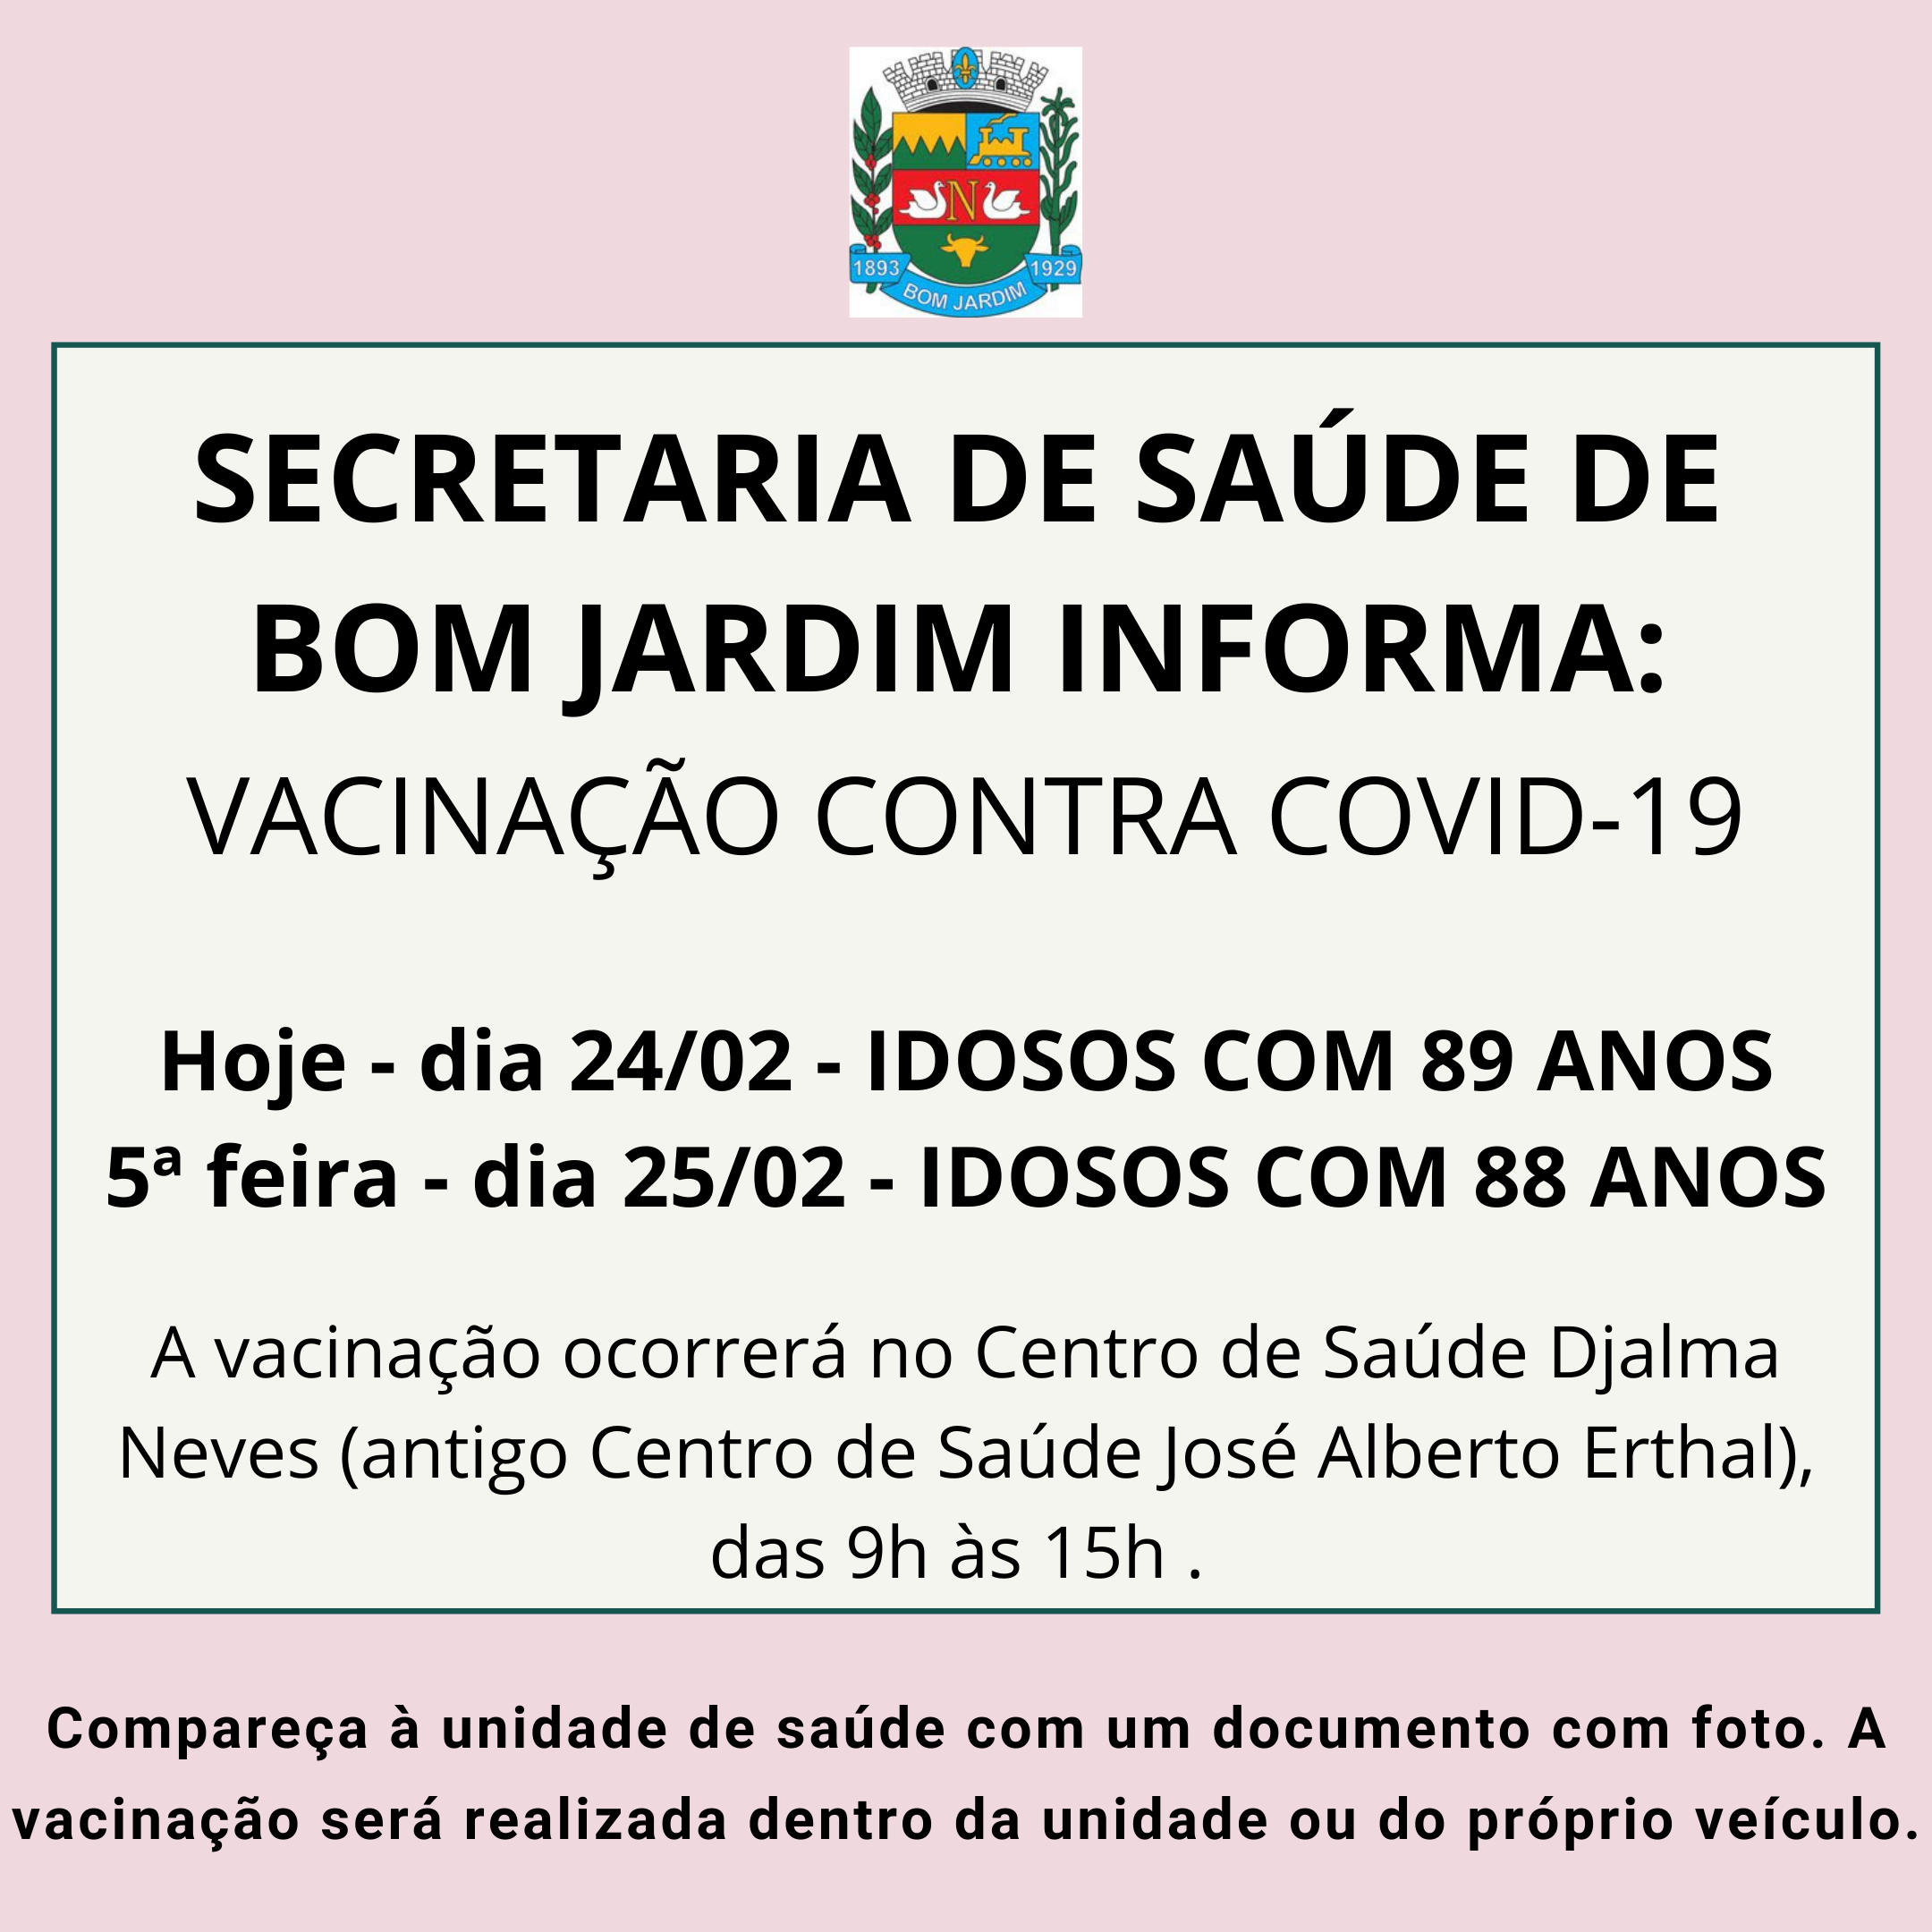 Prefeitura Municipal De Bom Jardim